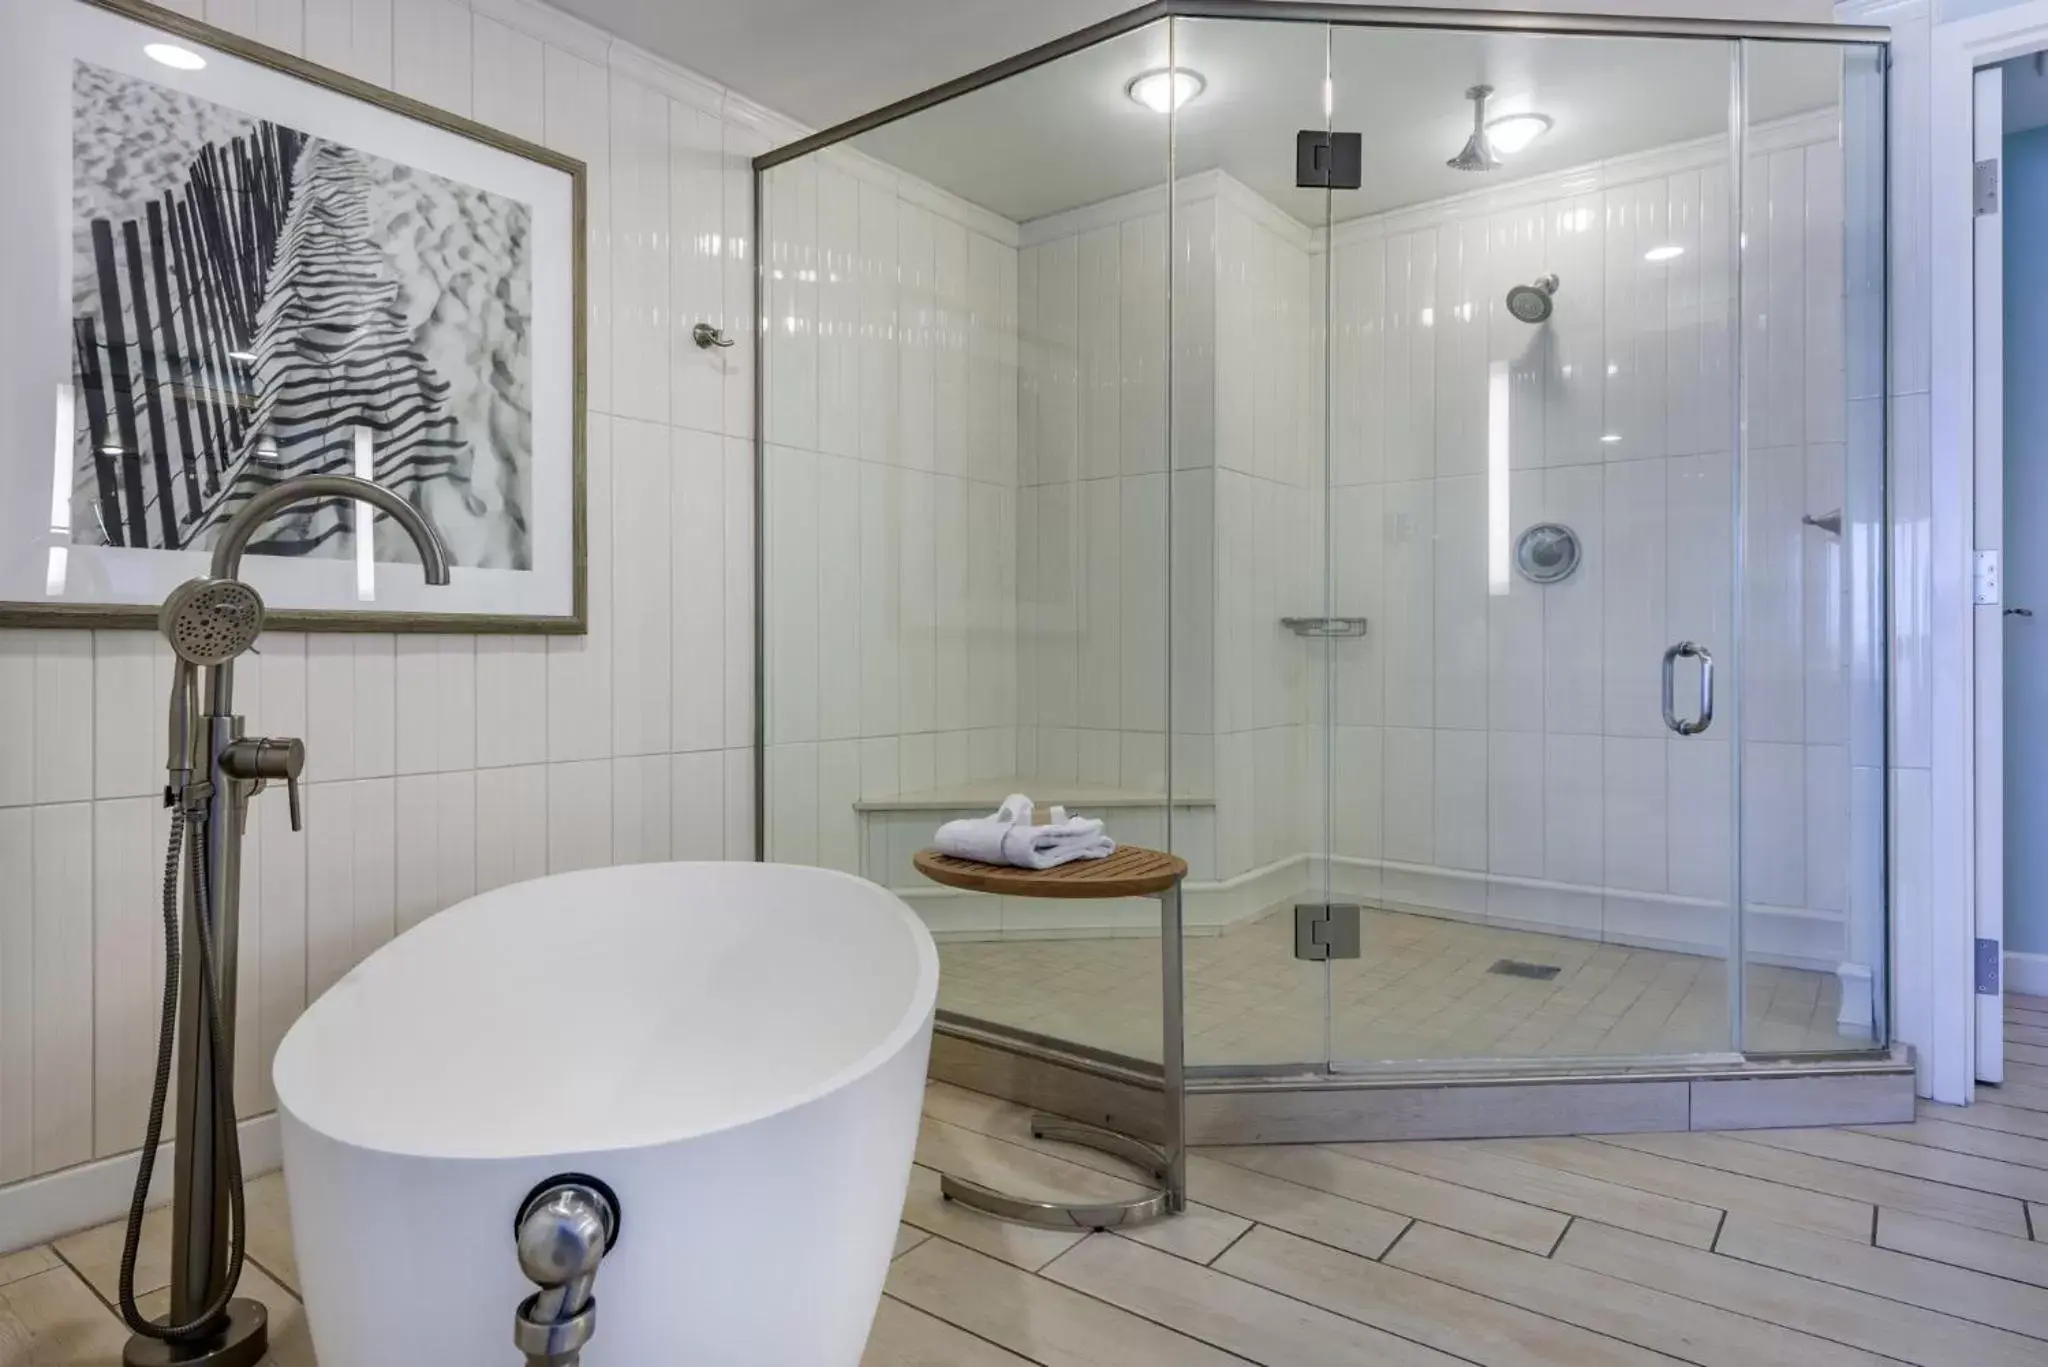 Photo of the whole room, Bathroom in Omni Amelia Island Resort